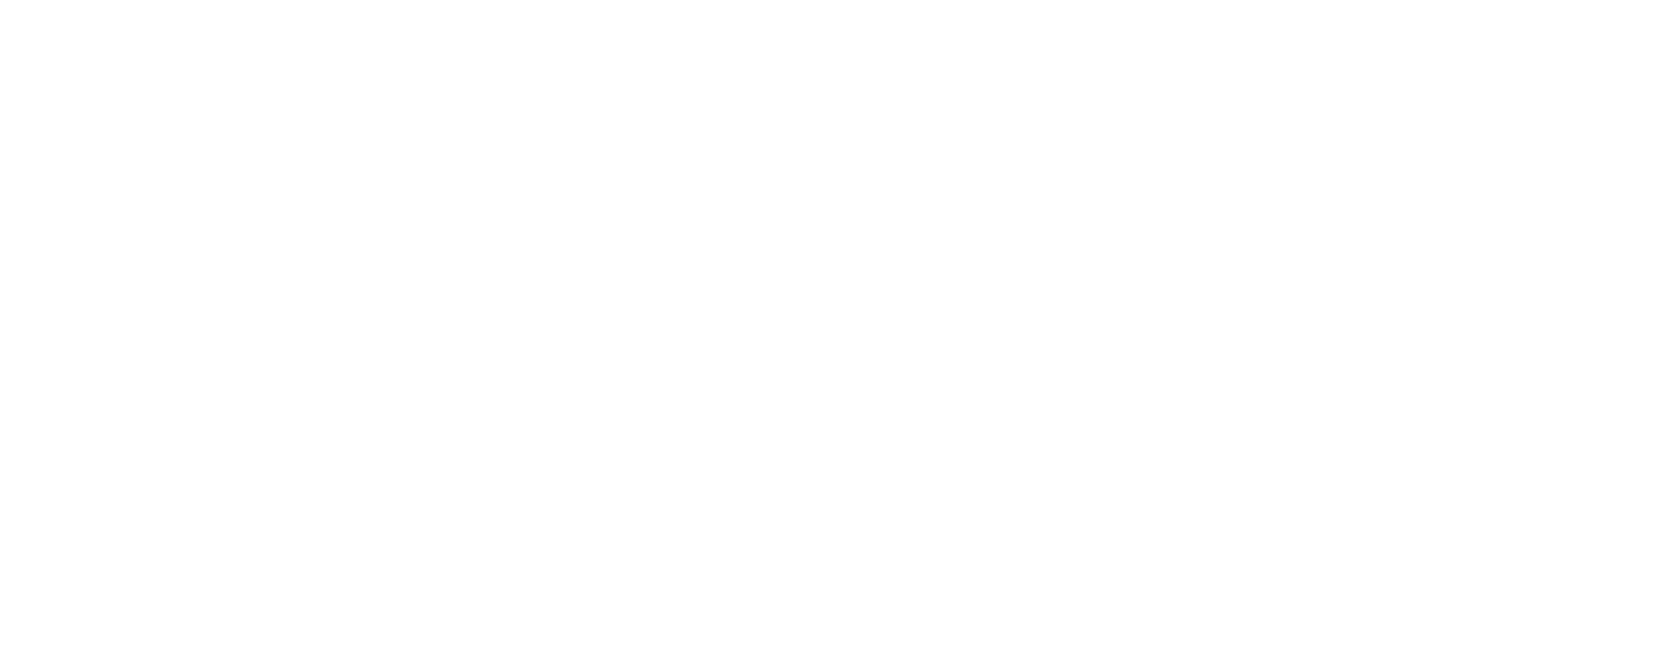 logo ichiya